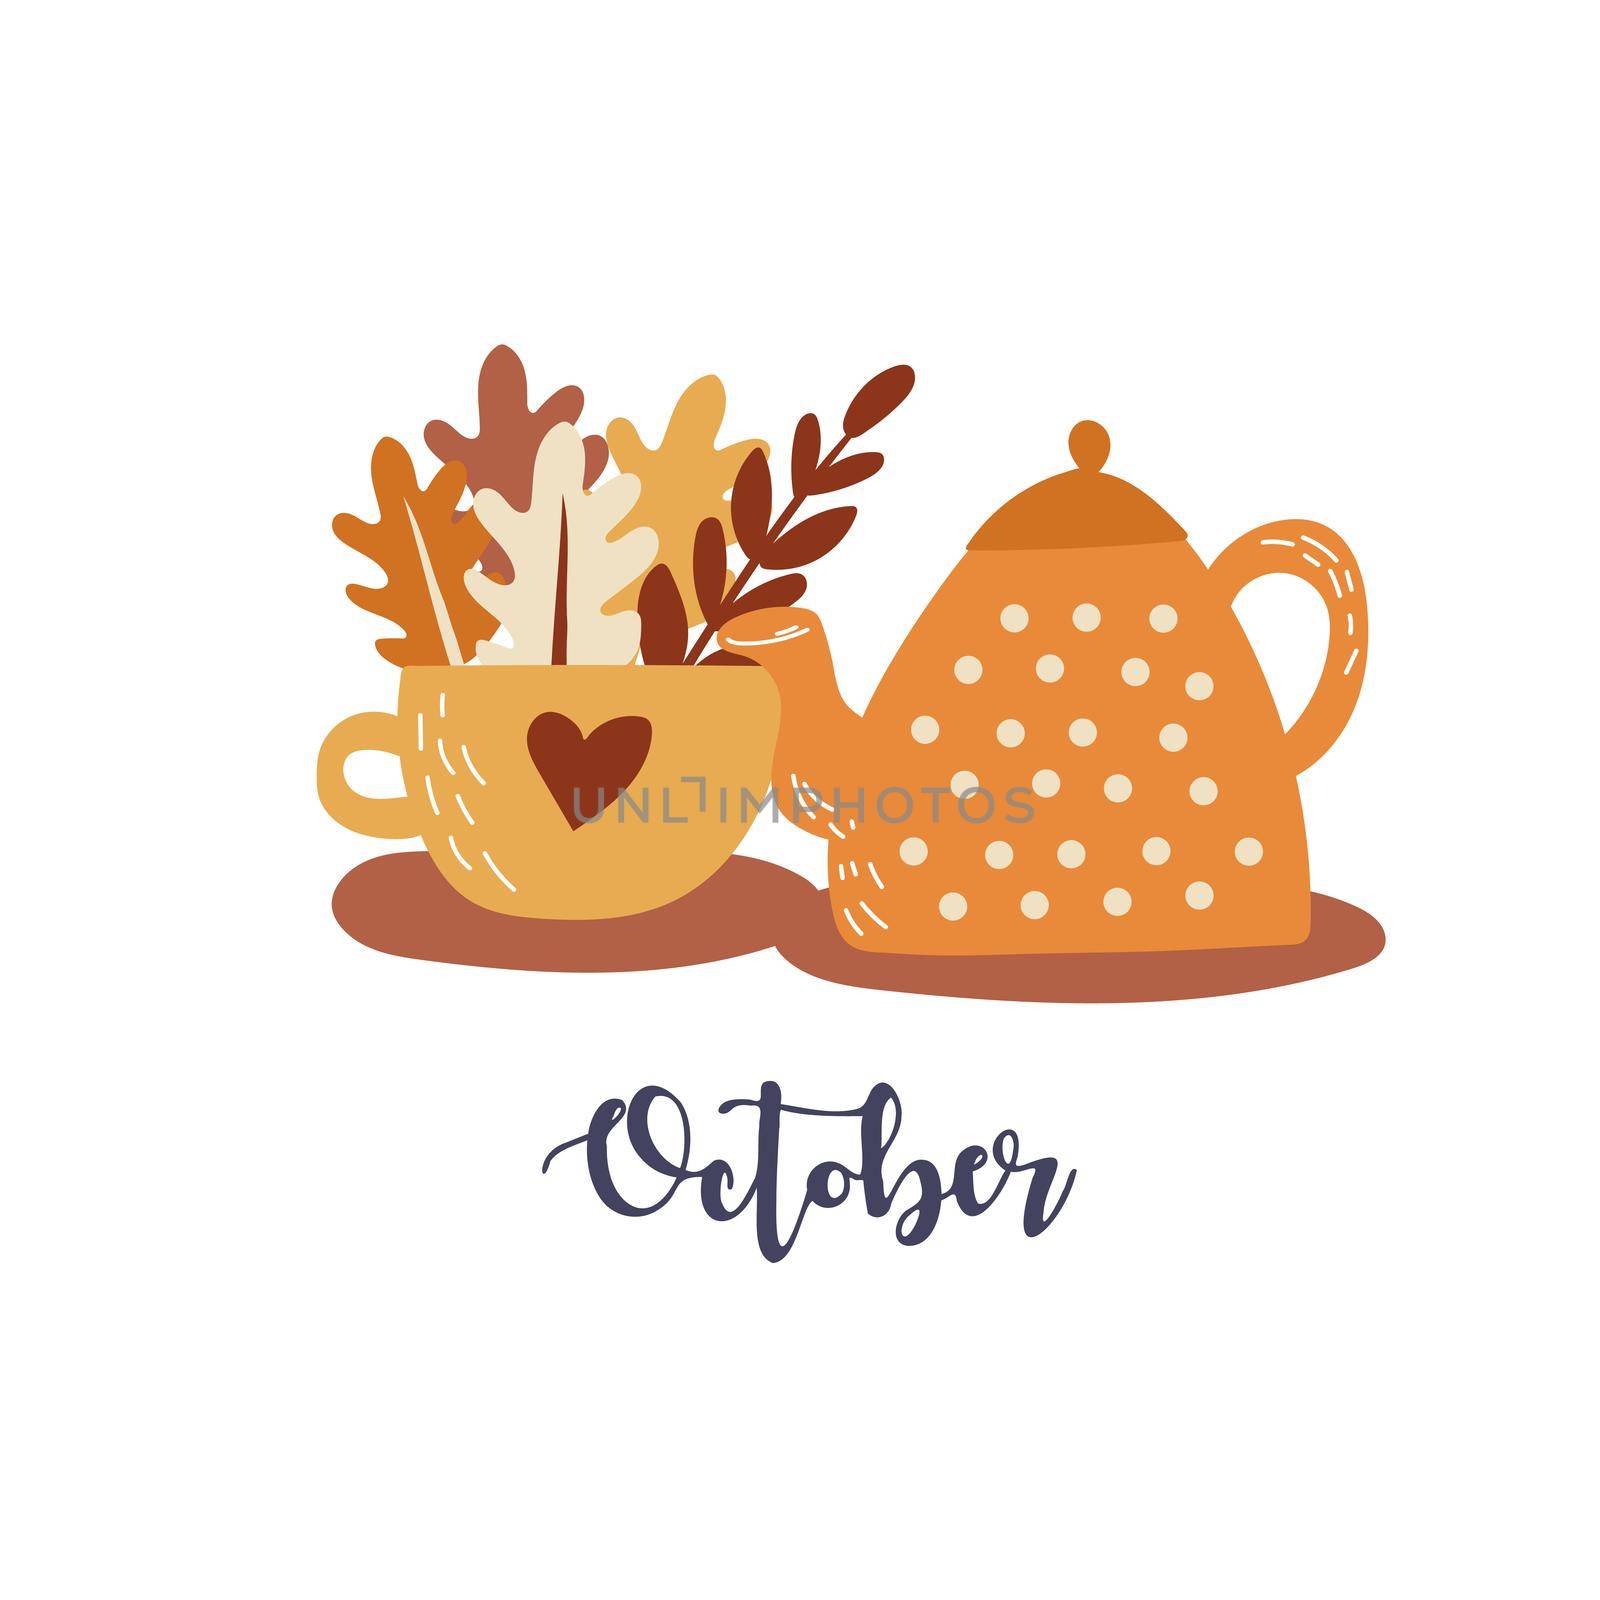 Autumn vector illustration - October. Cute teapot and cup with autumn leaves. Vector illustration for postcard. Hand-drawn.